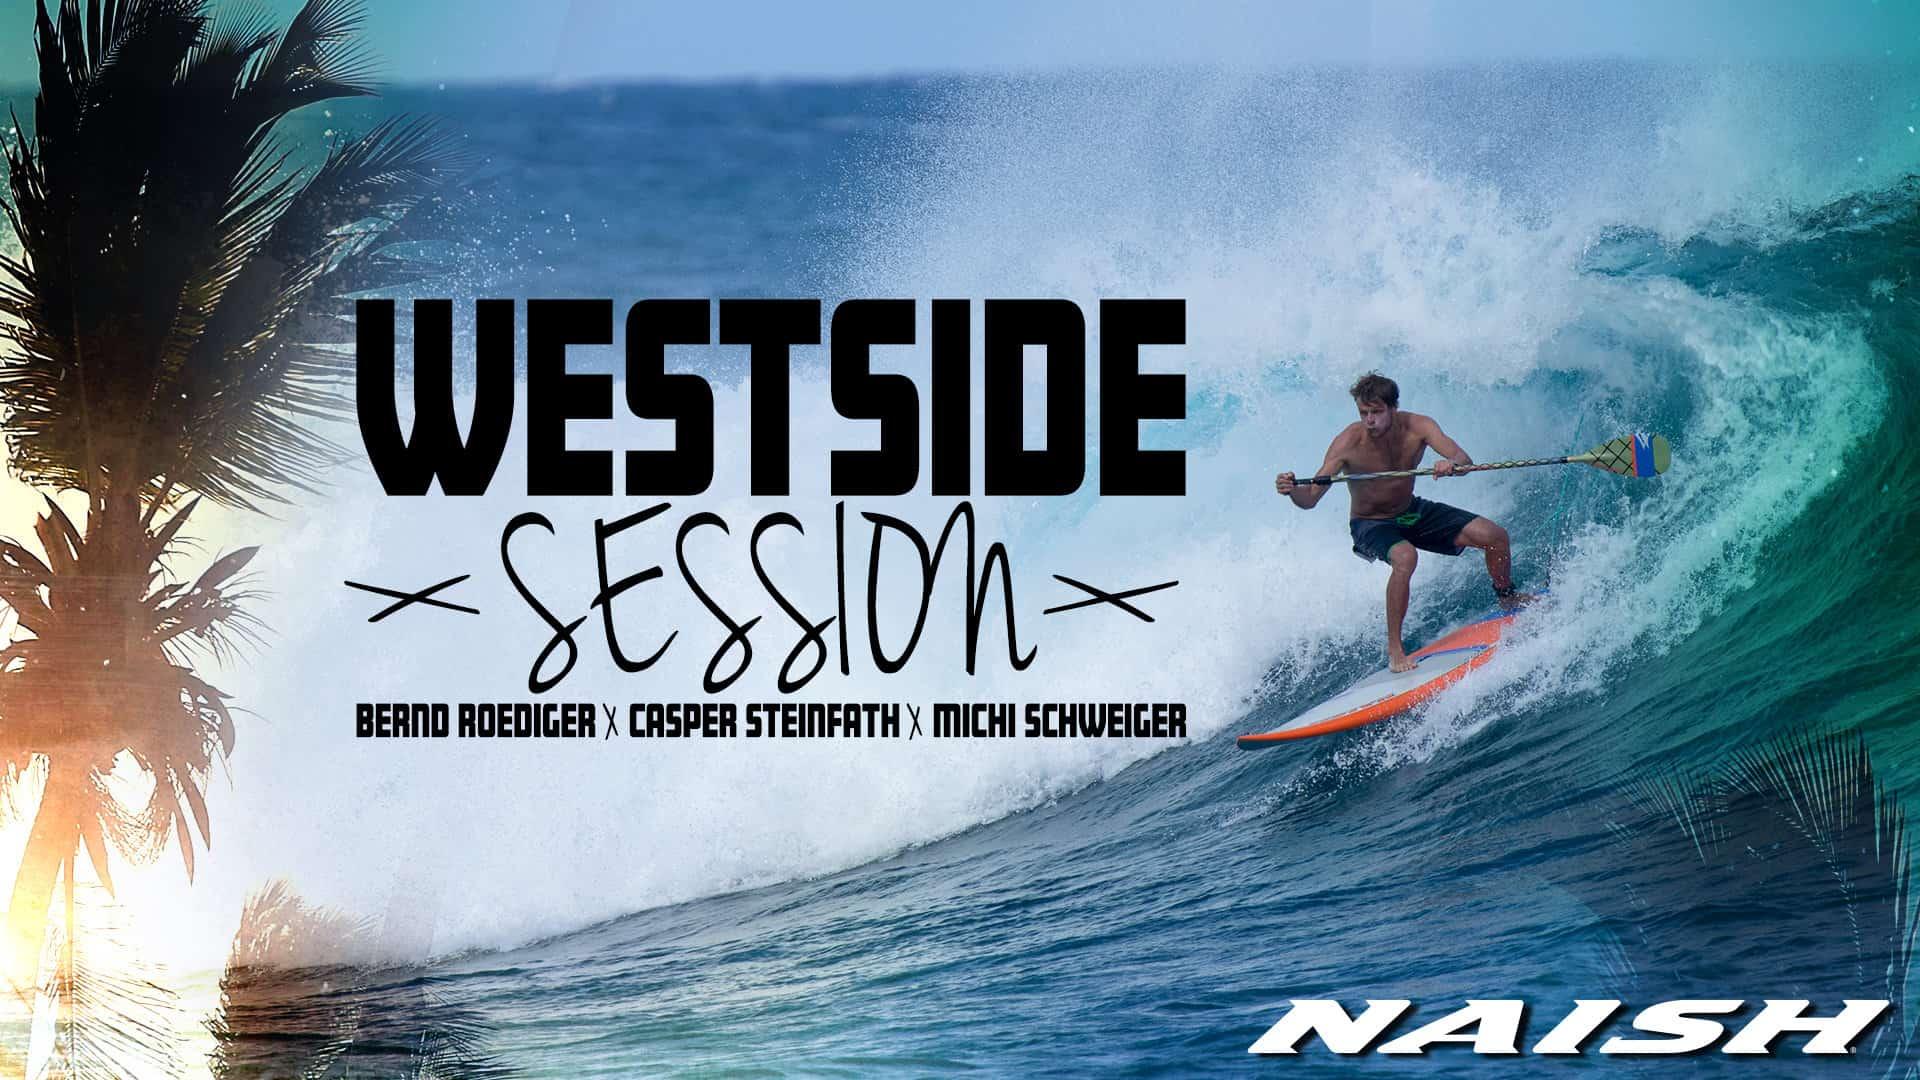 Westside Session - Naish.com